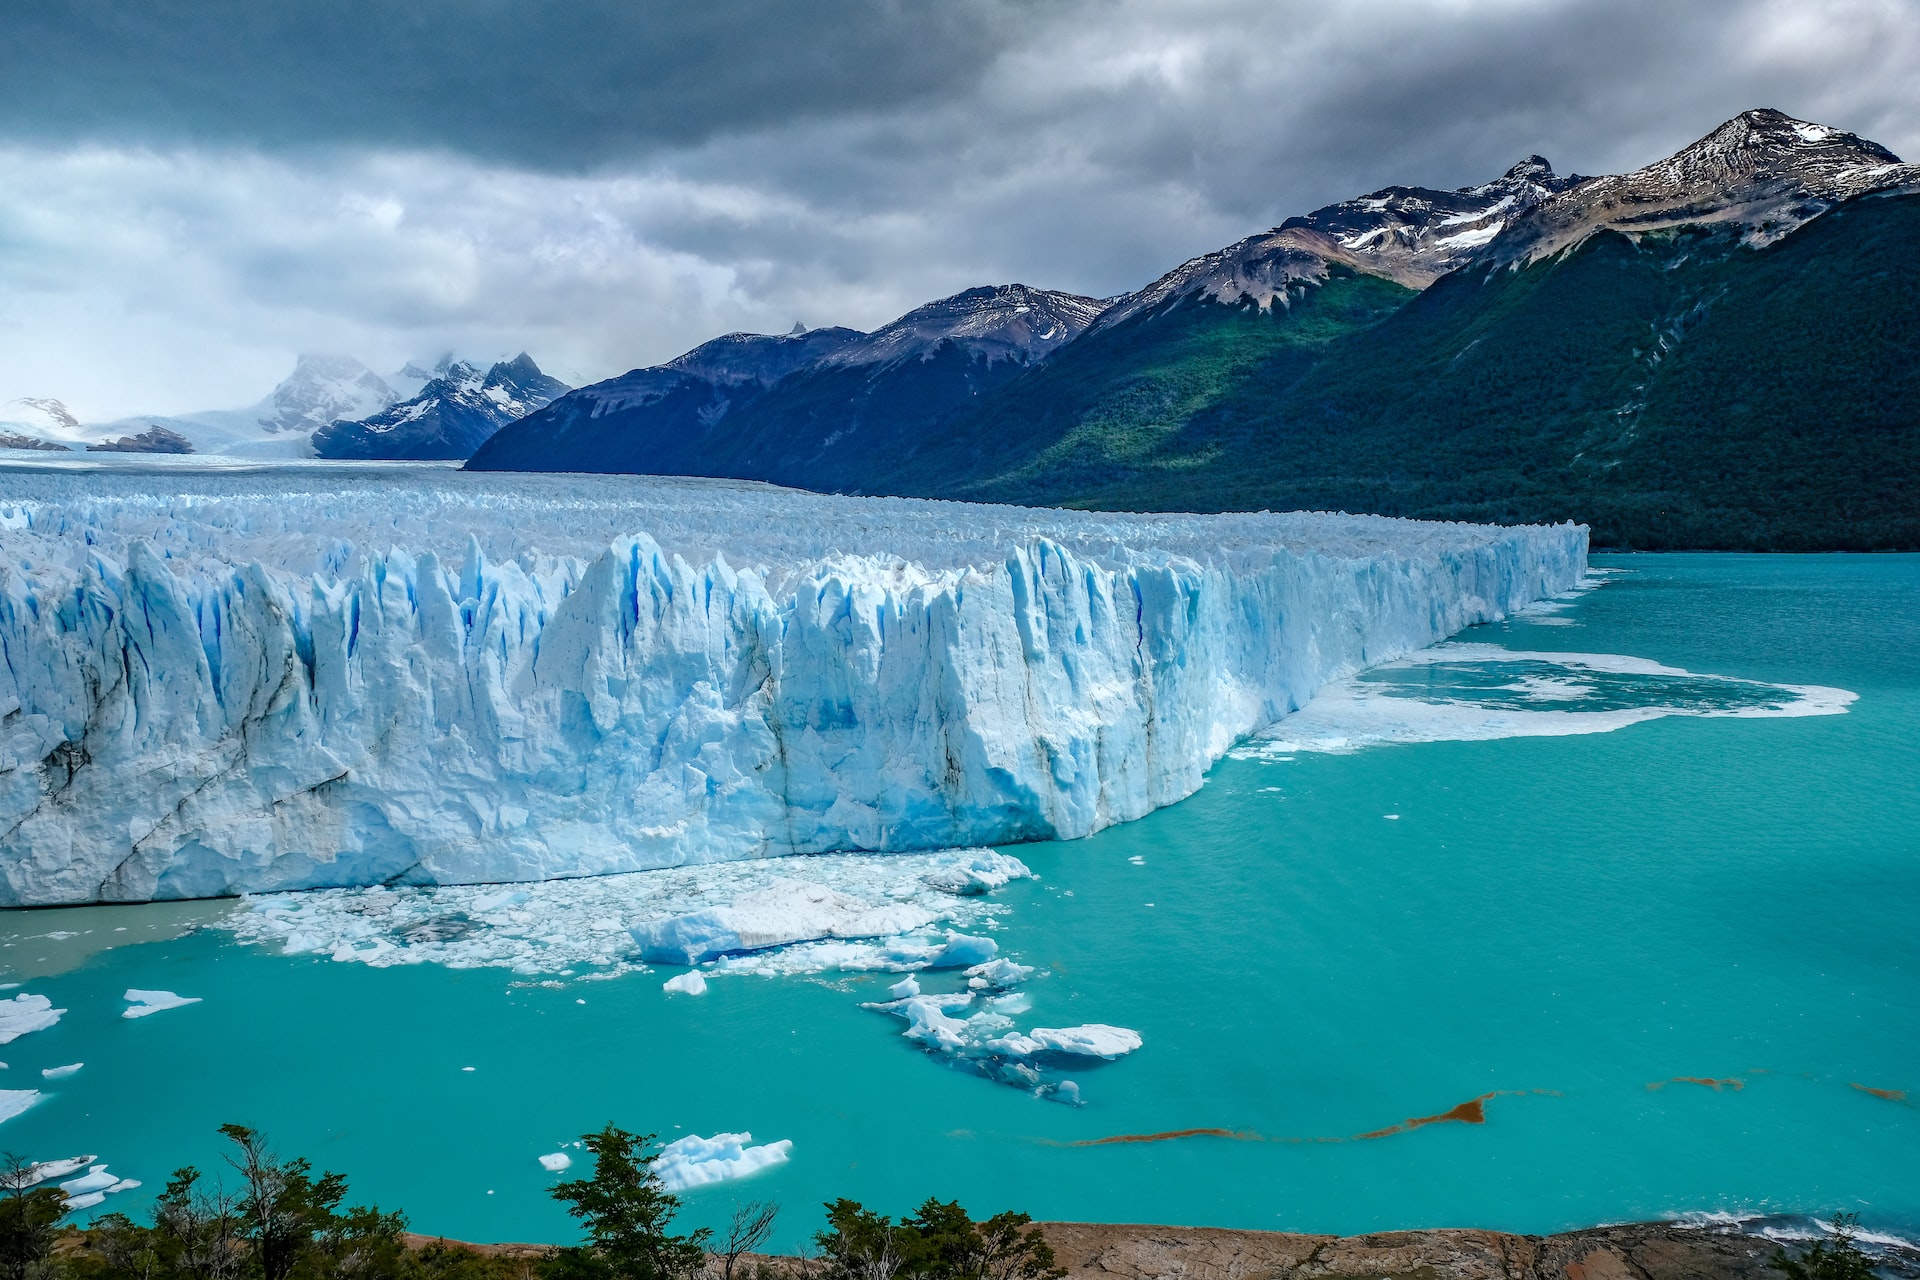 argentina travel guide and visit los glaciares national park
